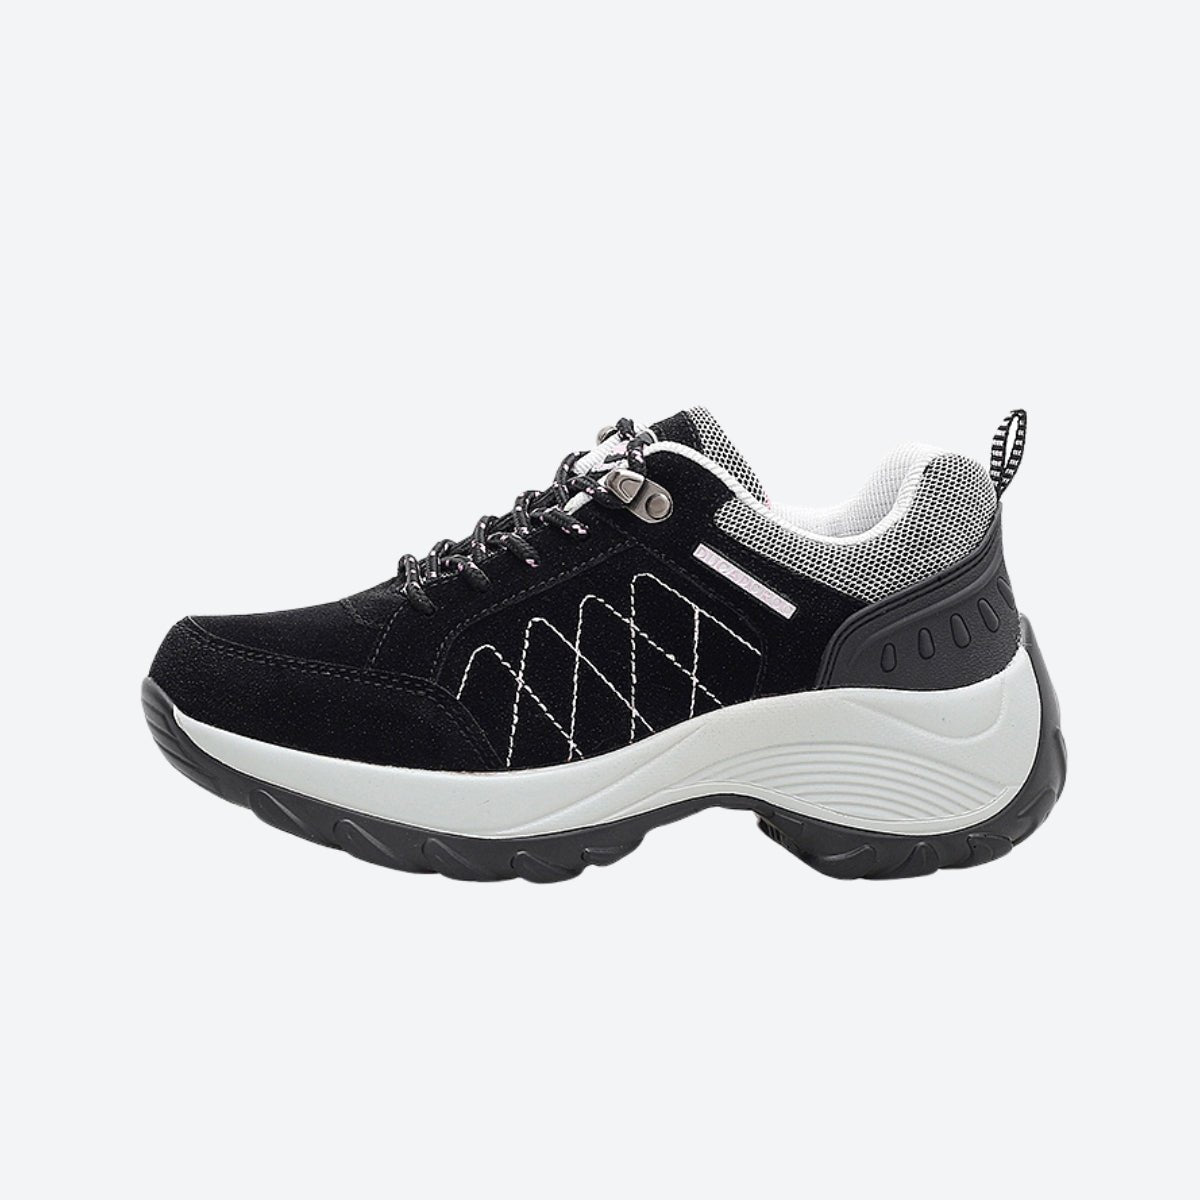 BELOS Women's Breathable Walking Tennis Shoes Lightweight Slip On Casual  Sneakers for Gym Travel Work, White, 8.5 price in Saudi Arabia,   Saudi Arabia